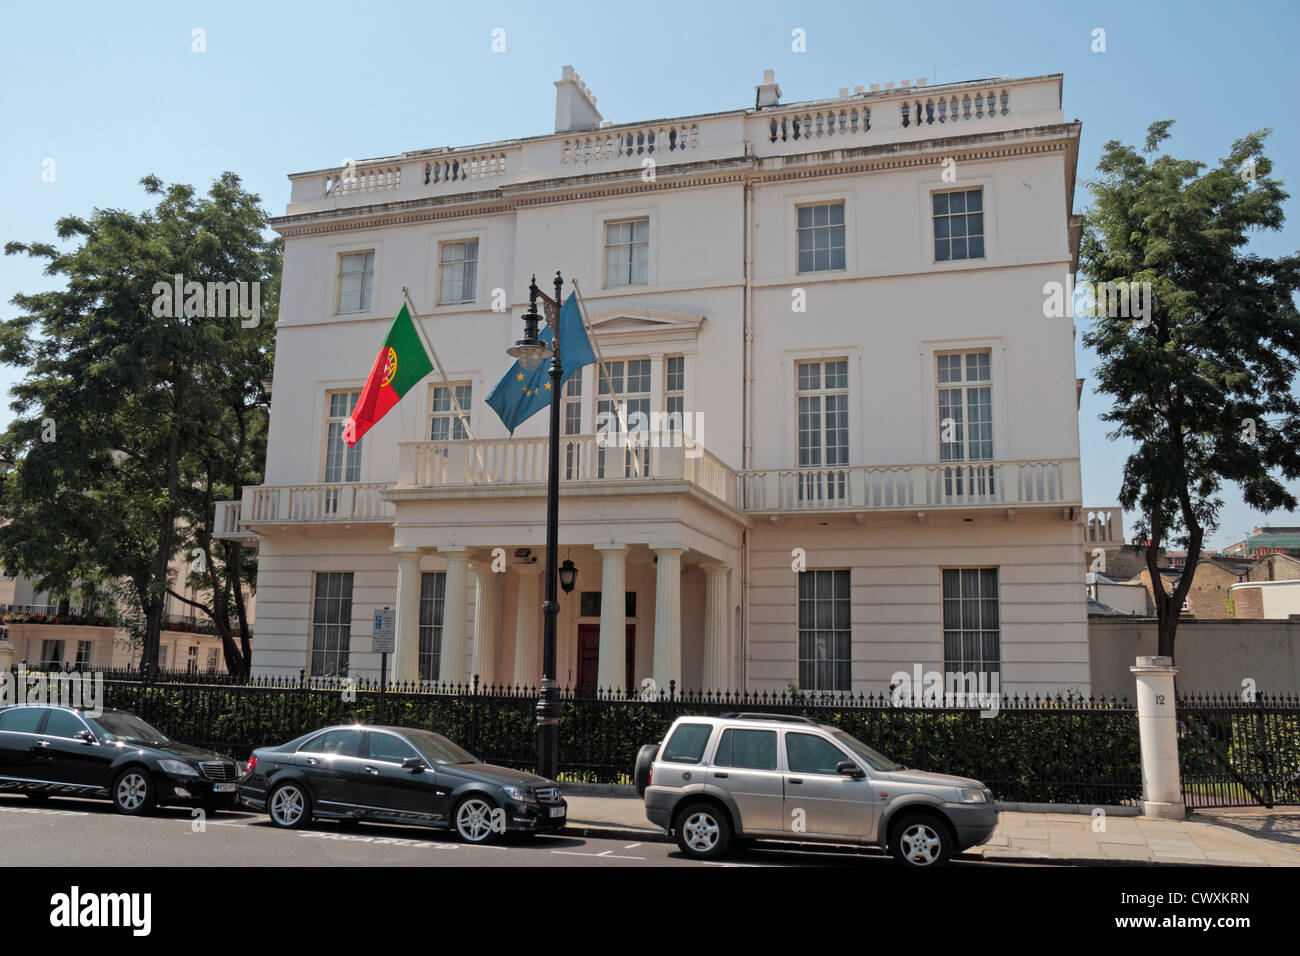 The Embassy of Portugal on Belgrave Square, Belgravia, London, UK. Stock Photo